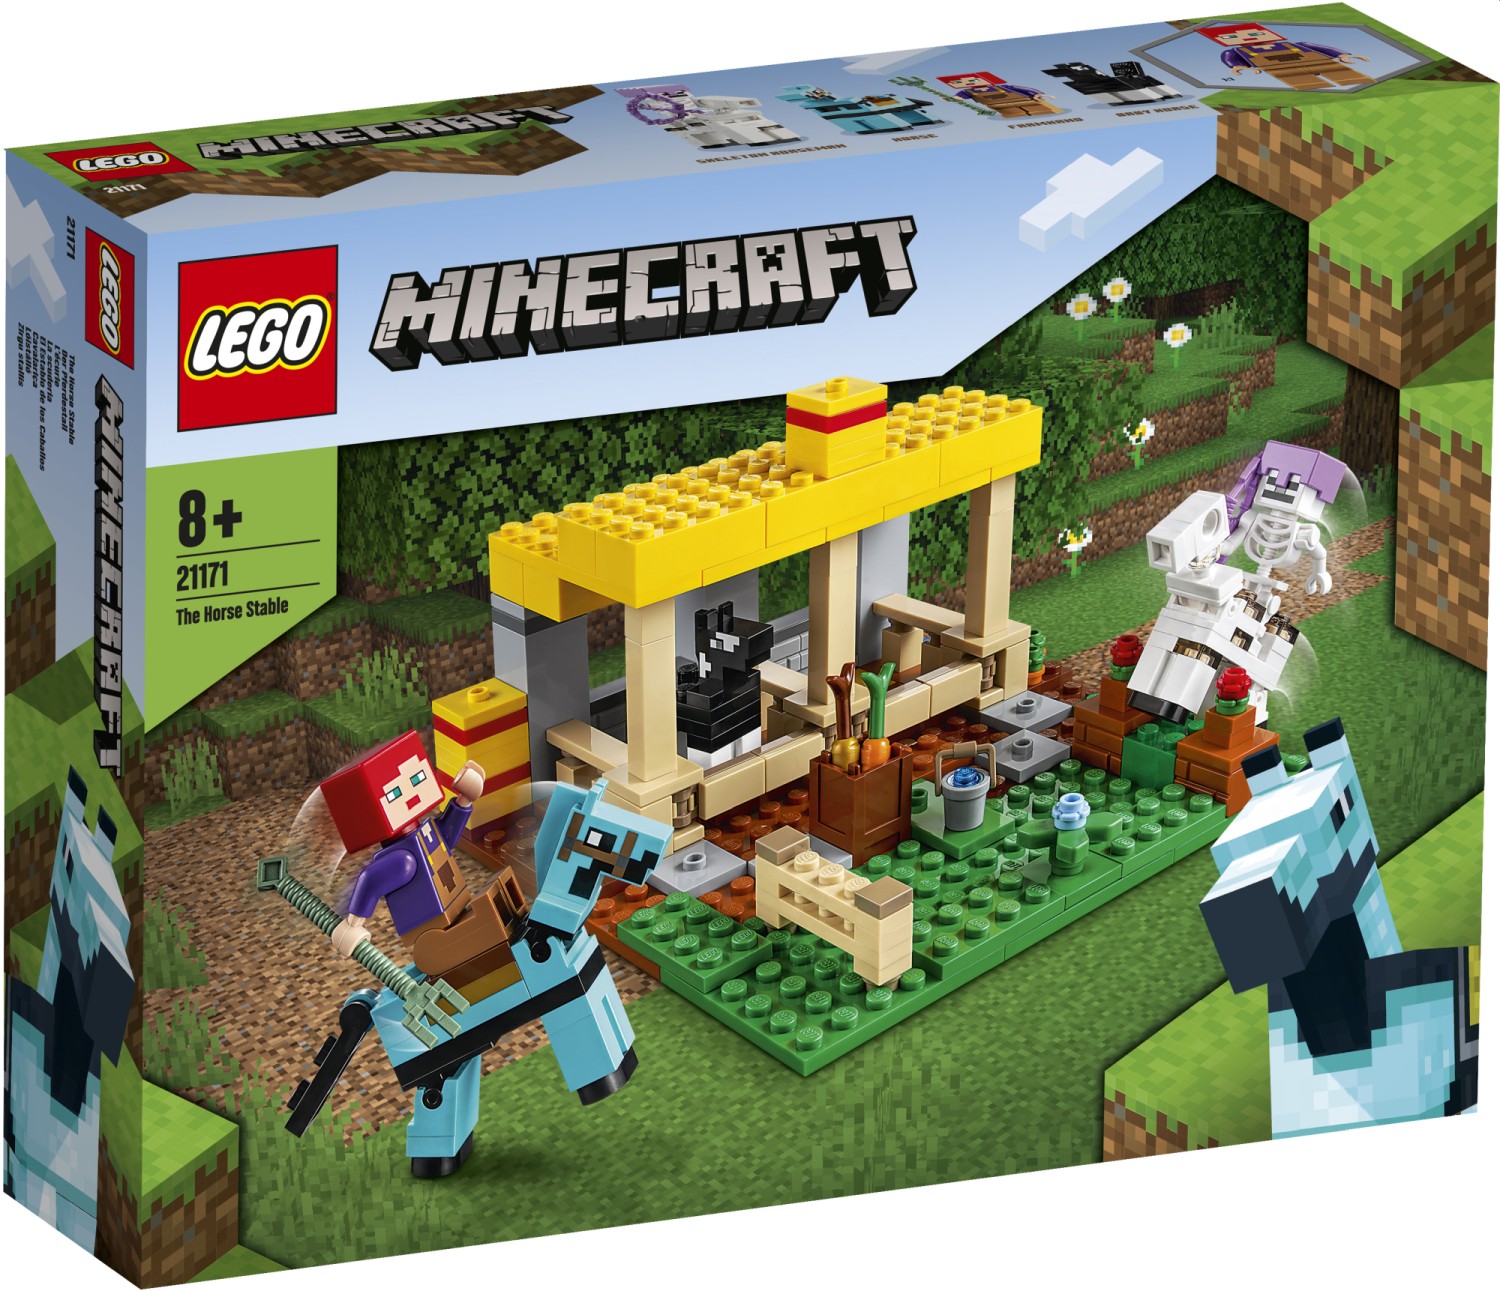 Lego Minecraft Summer 21 Sets Revealed The Brick Fan